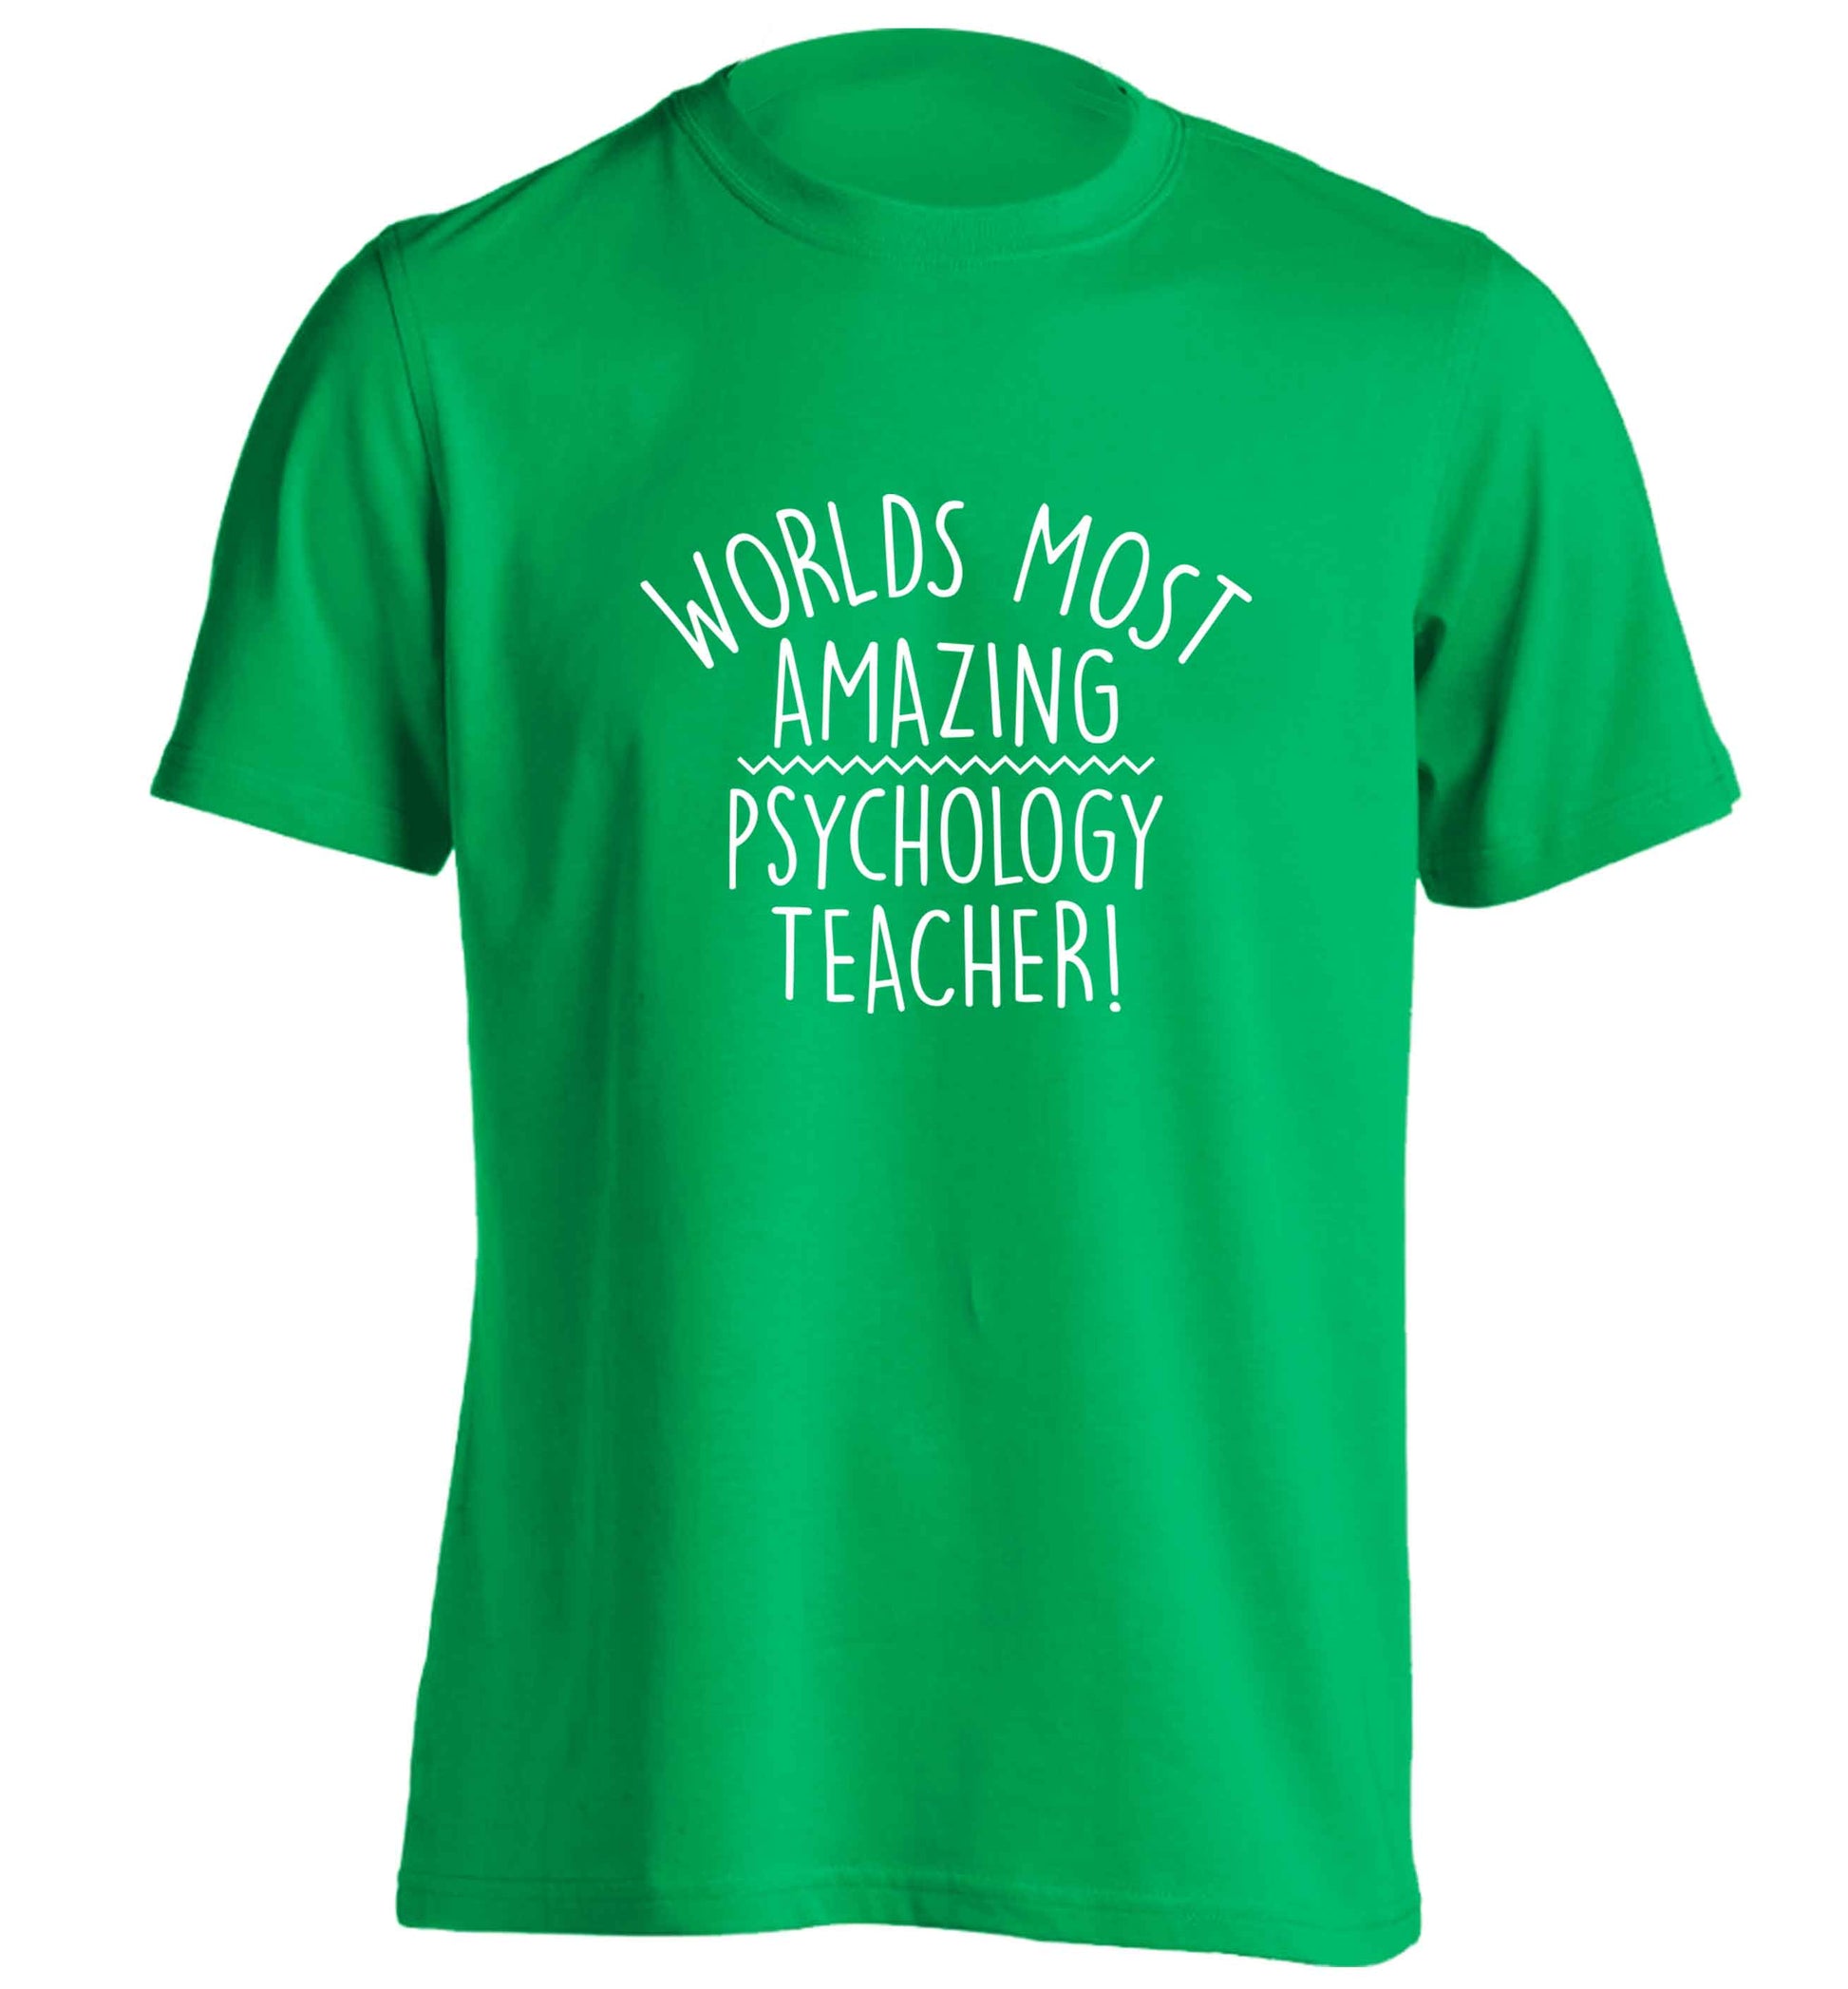 Worlds most amazing psychology teacher adults unisex green Tshirt 2XL